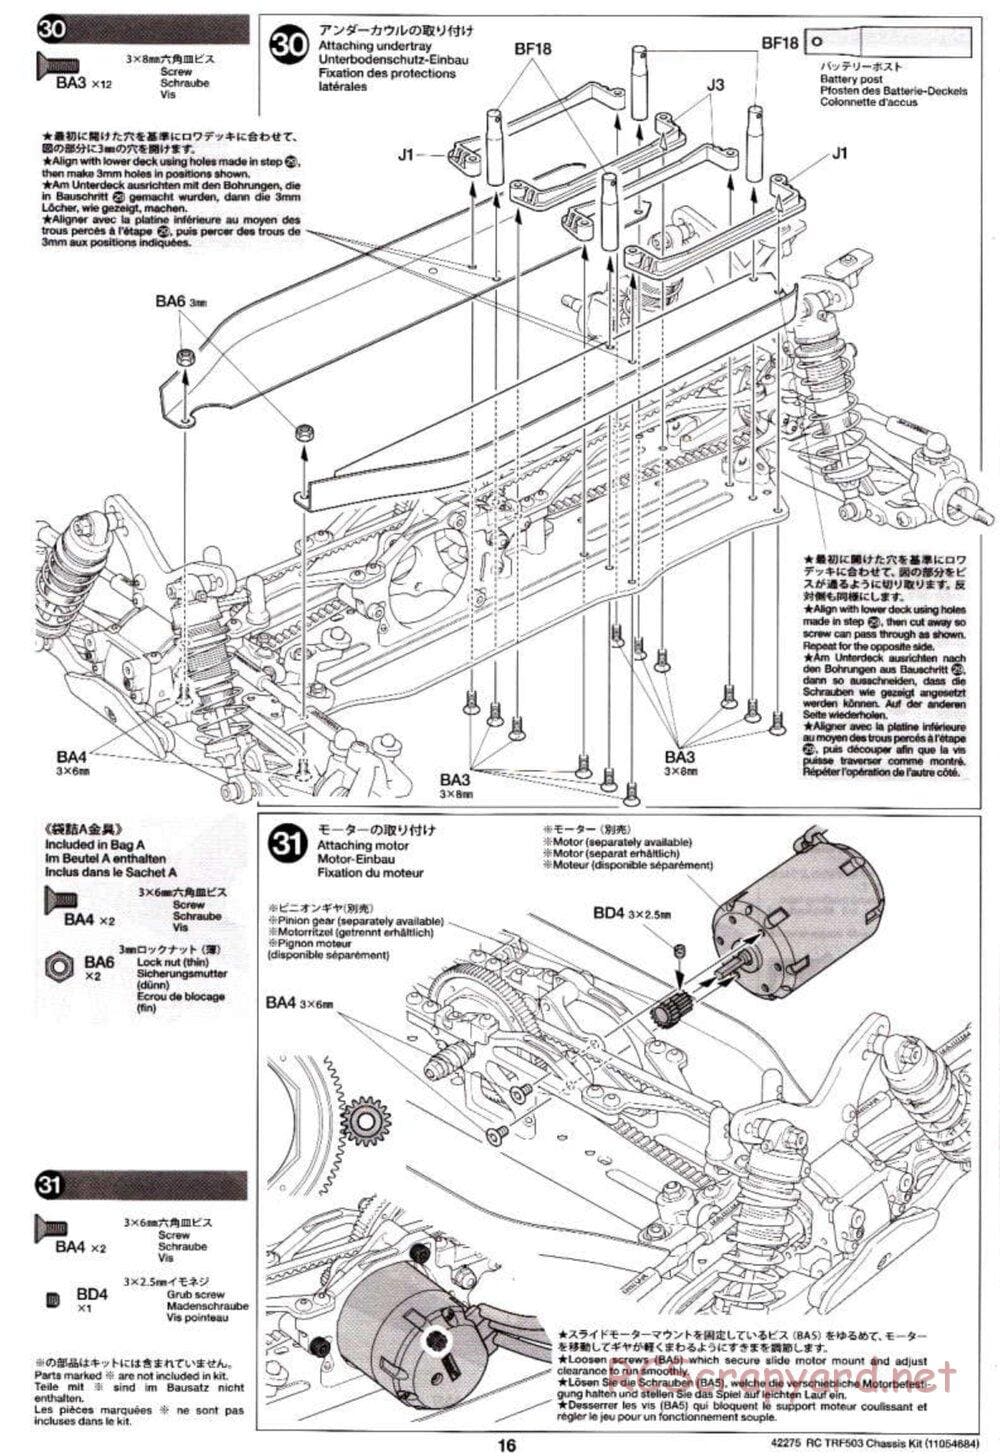 Tamiya - TRF503 Chassis - Manual - Page 16